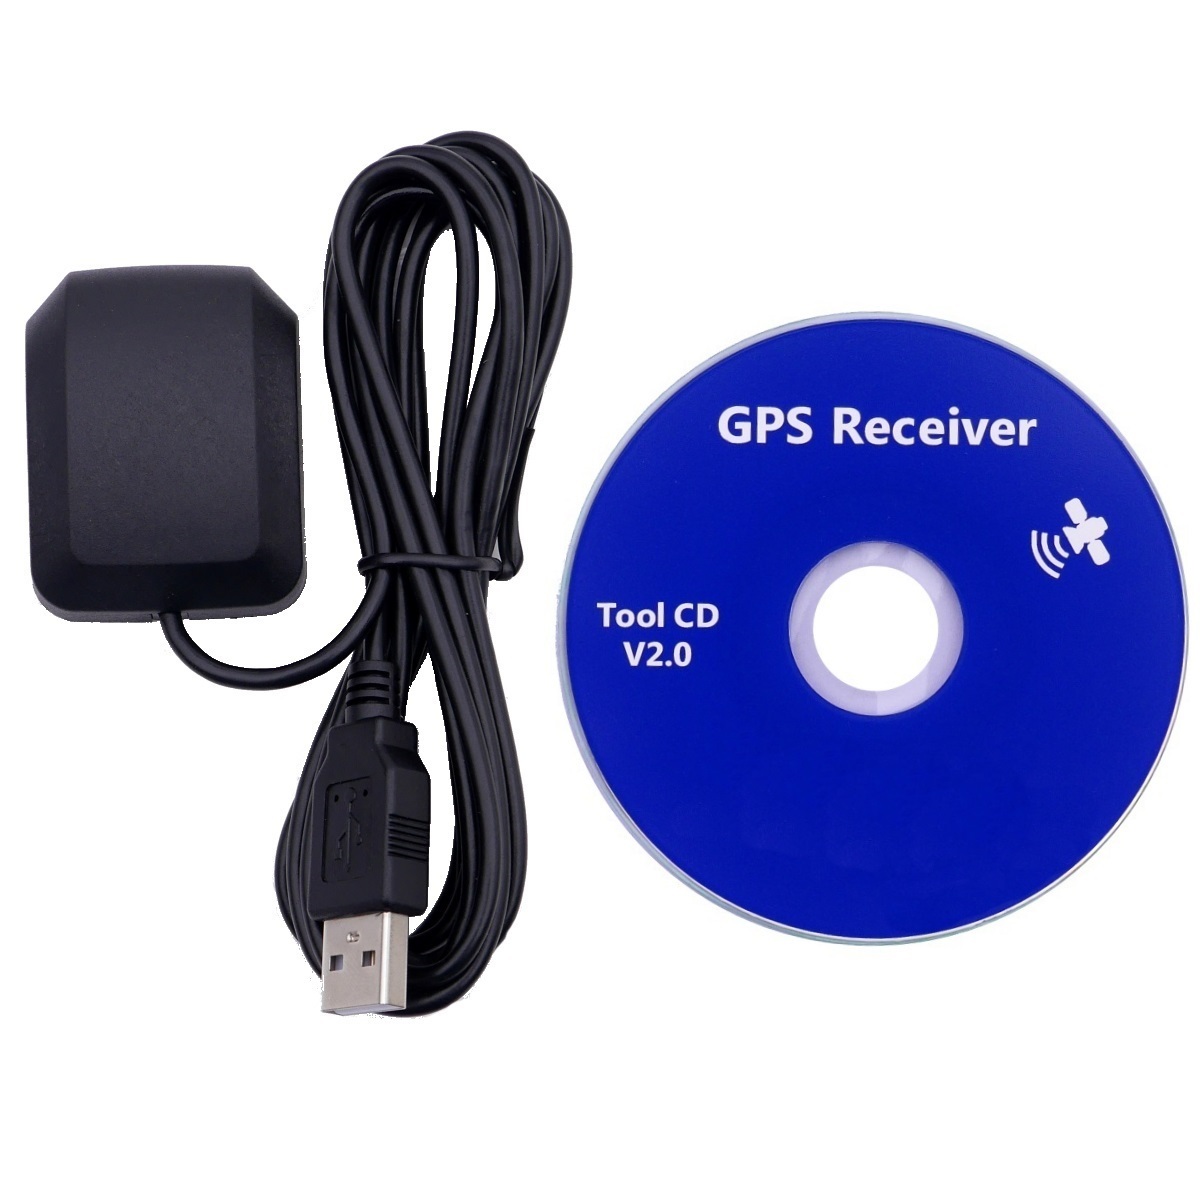 GPS Smart Antenna VK-172 NEW USB GPS Receiver Ublox7 for PC laptop Windows S9N8 